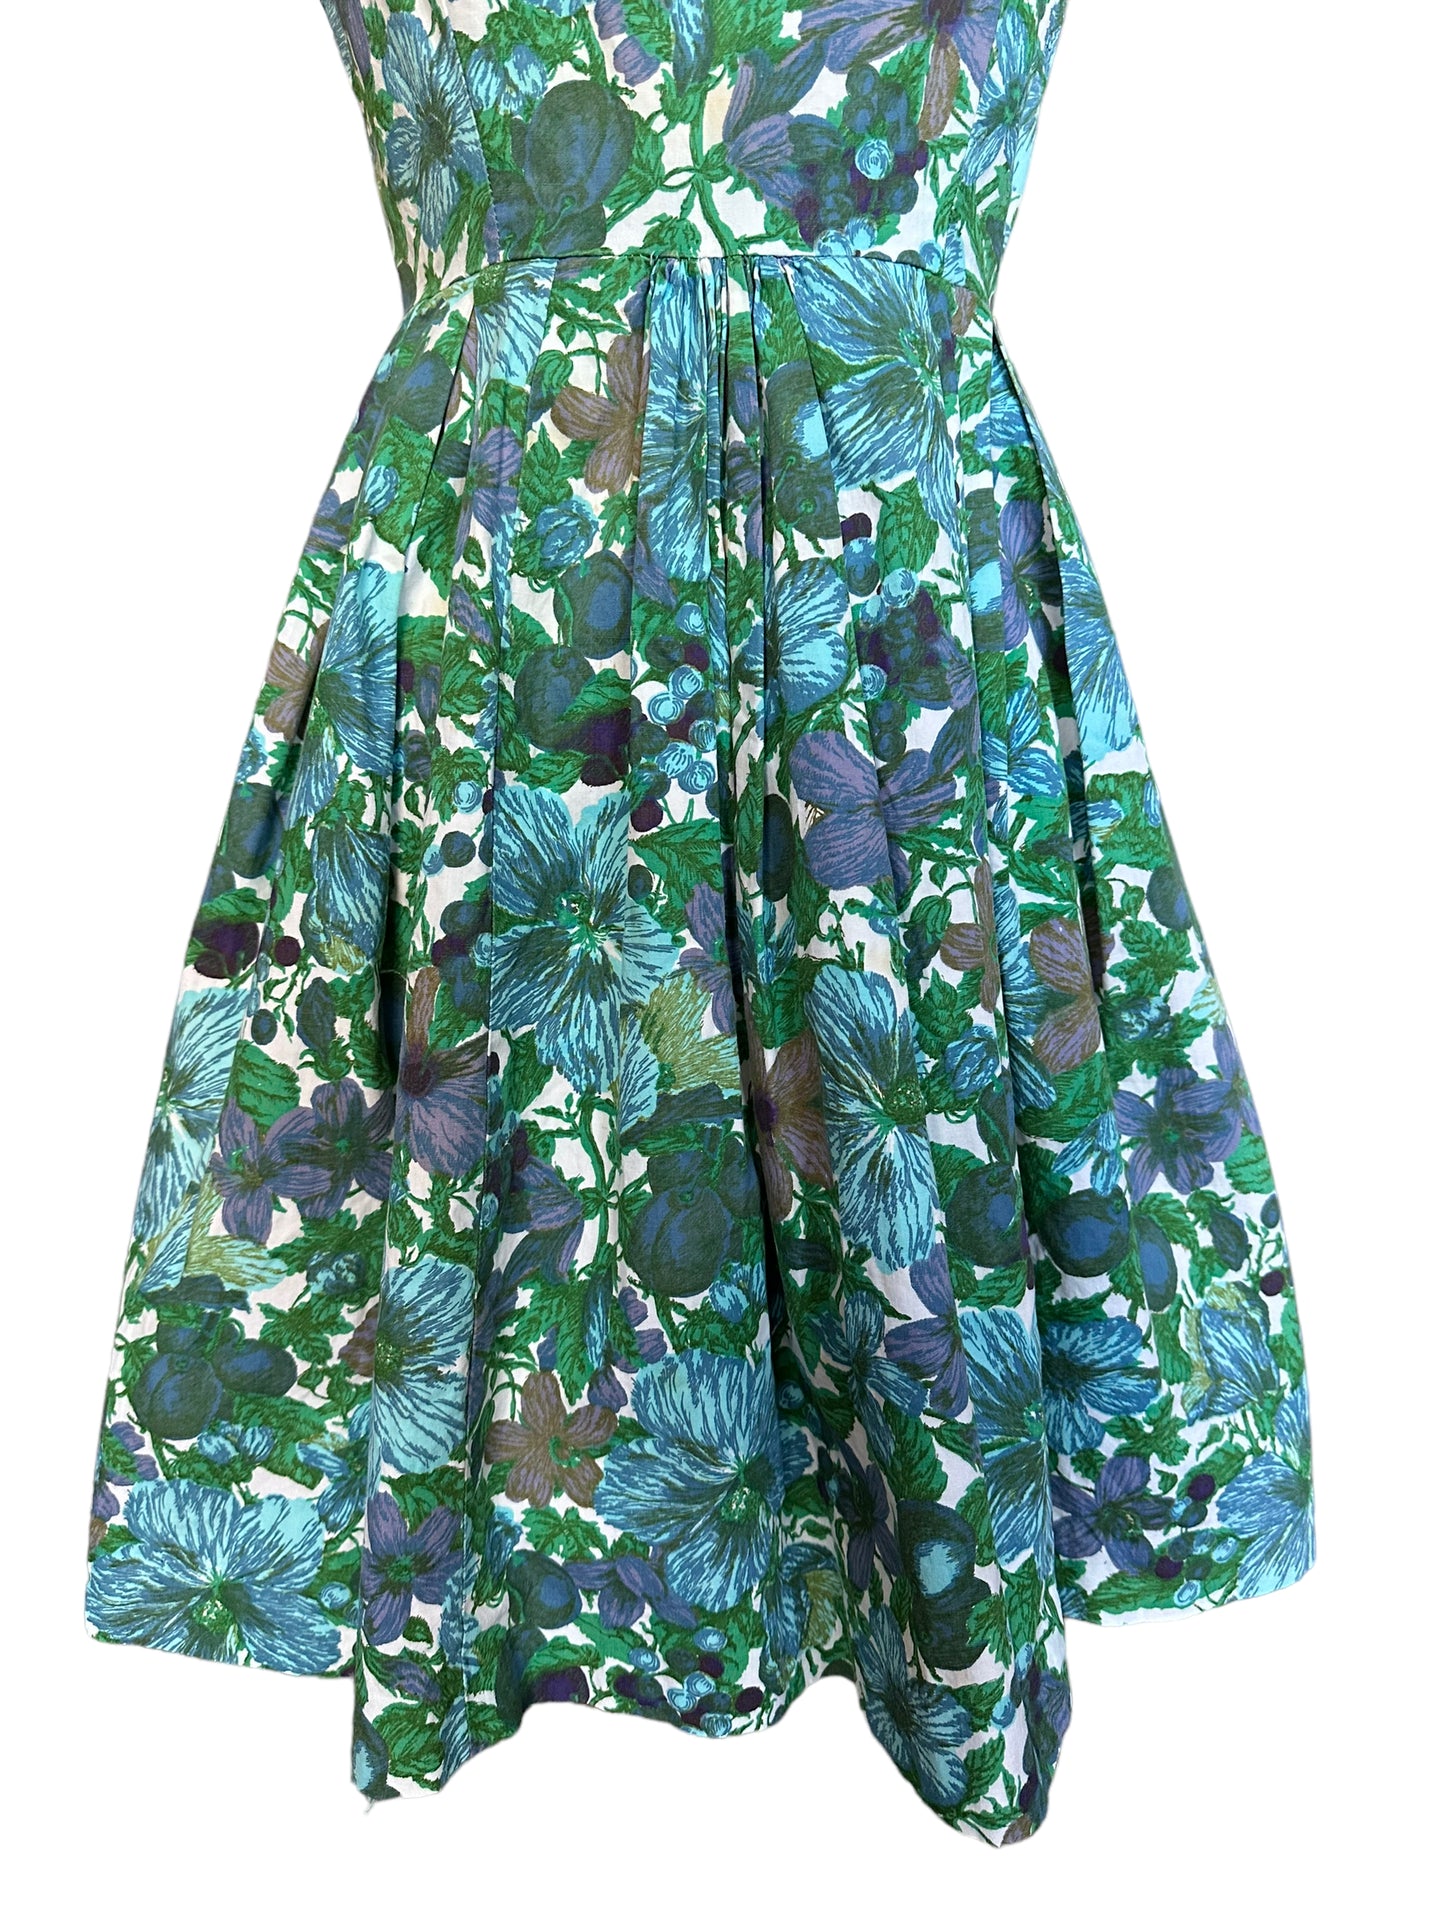 Front skirt view of Vintage 1950s Blue Floral Cotton Dress |  Barn Owl True Vintage | Seattle Vintage Dresses